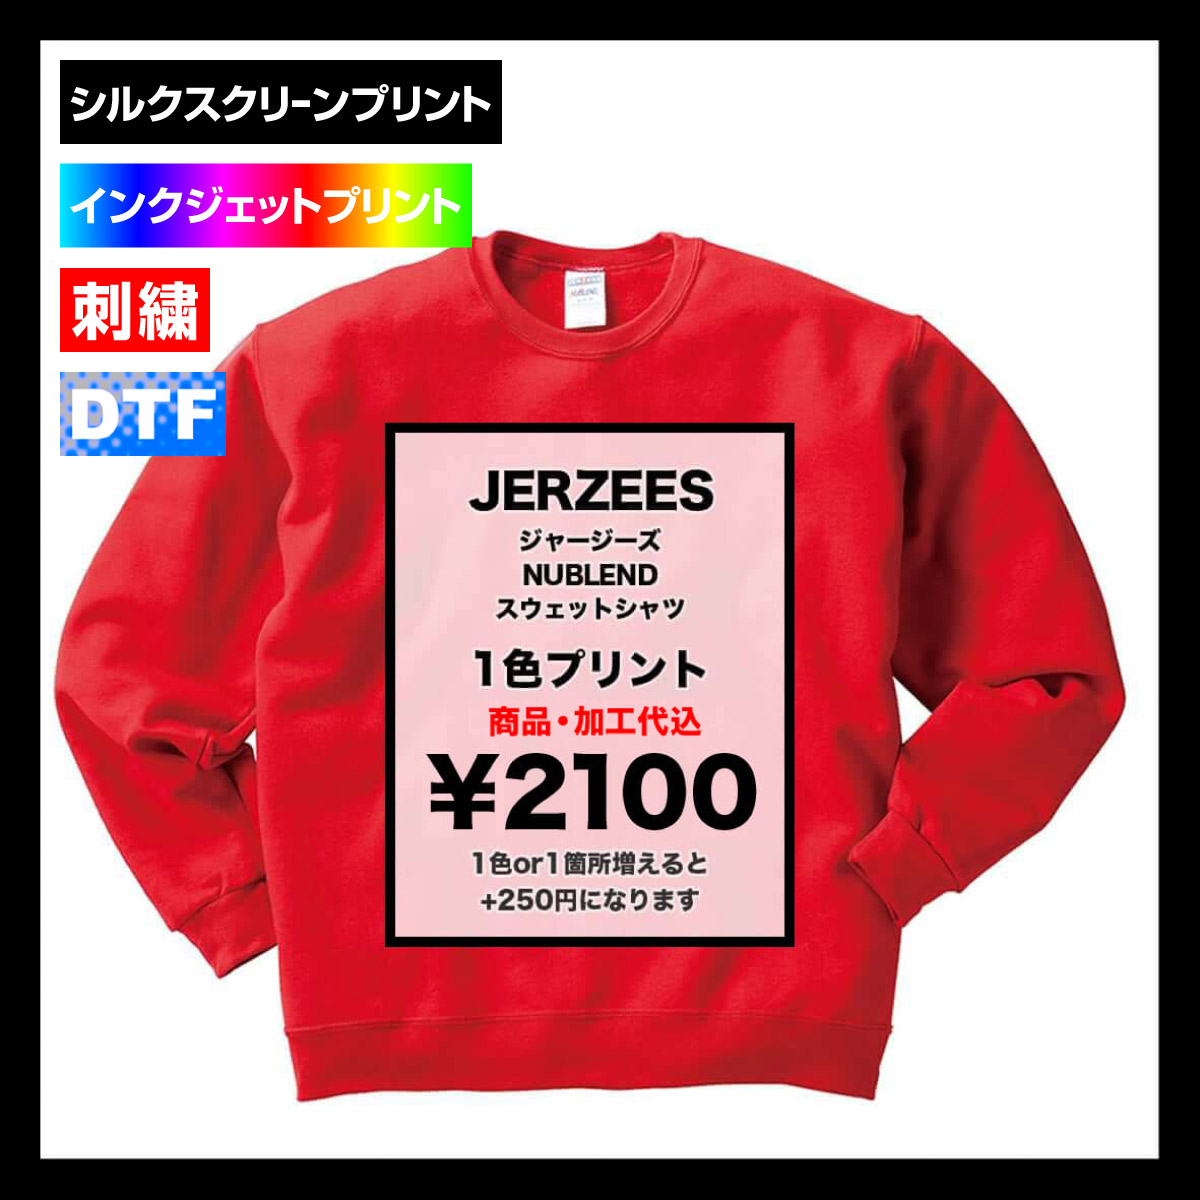 Jerzees ジャージーズ 8.0 oz NUBLEND スウェットシャツ (品番562M)